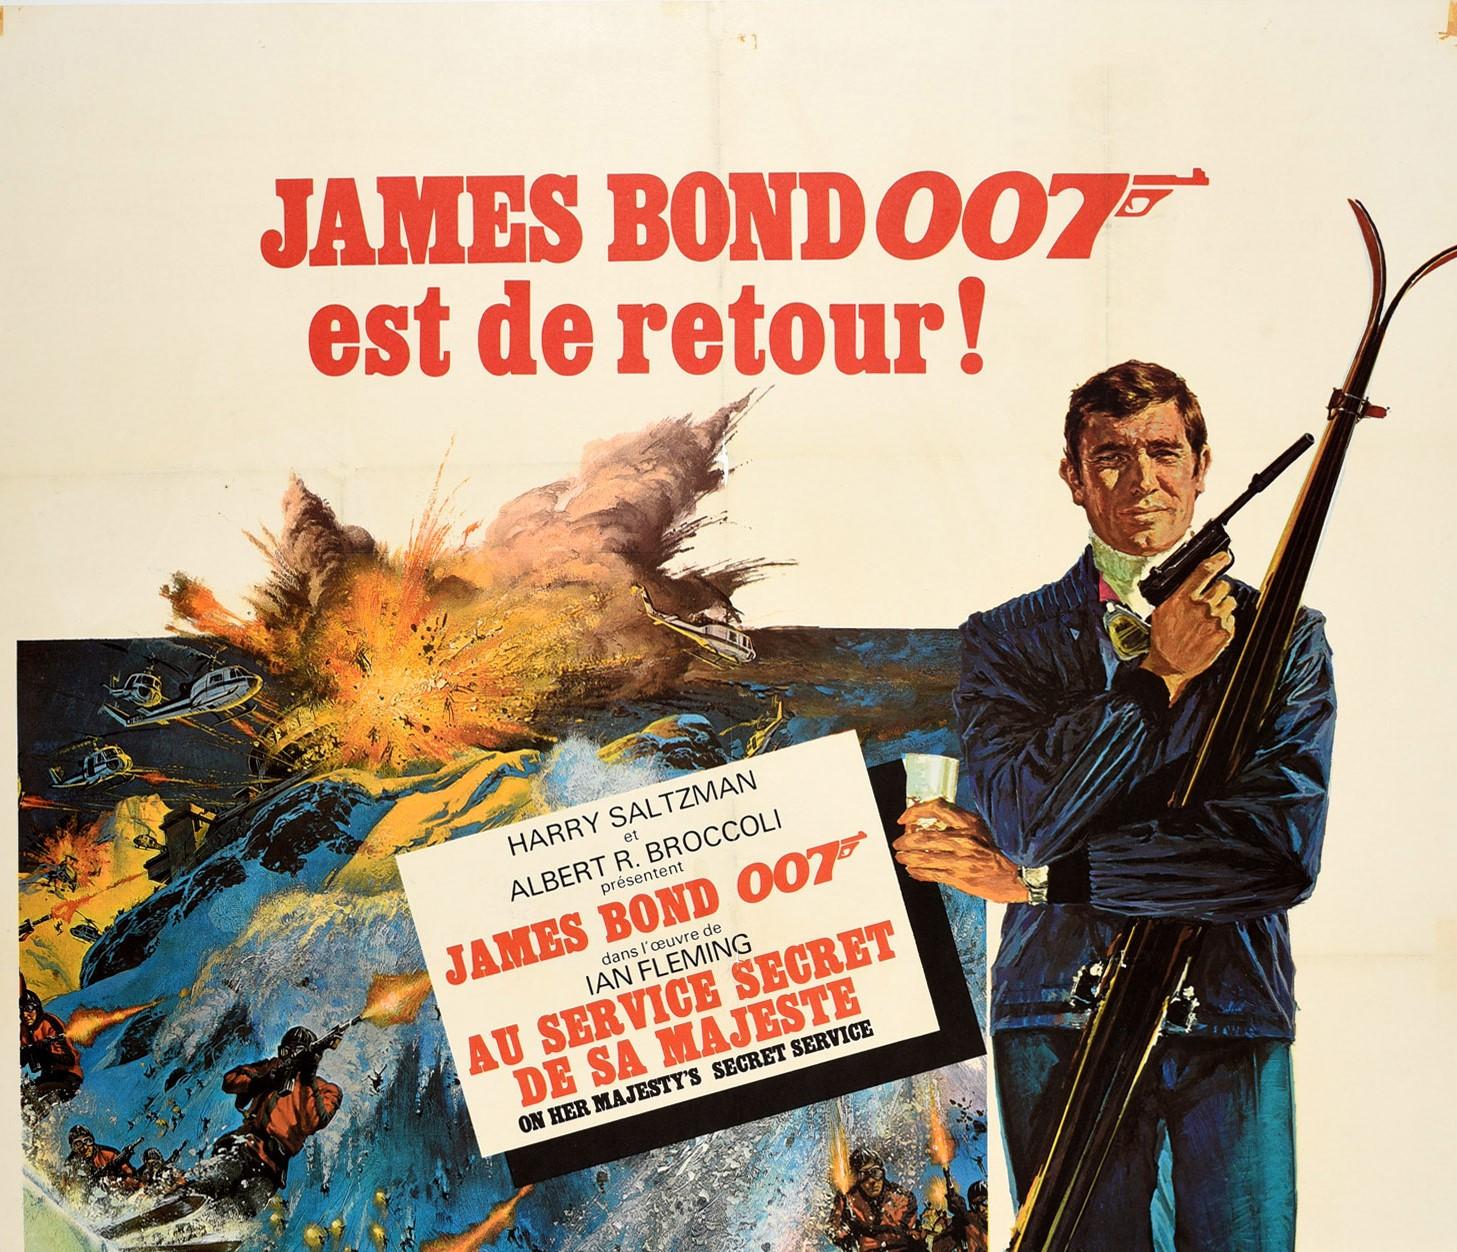 Original vintage French release movie poster for the James Bond film On Her Majesty's Secret Service / Au Service Secret De Sa Majeste - James Bond 007 est de retour! / James Bond 007 is back! - directed by Peter Hunt and starring George Lazenby as